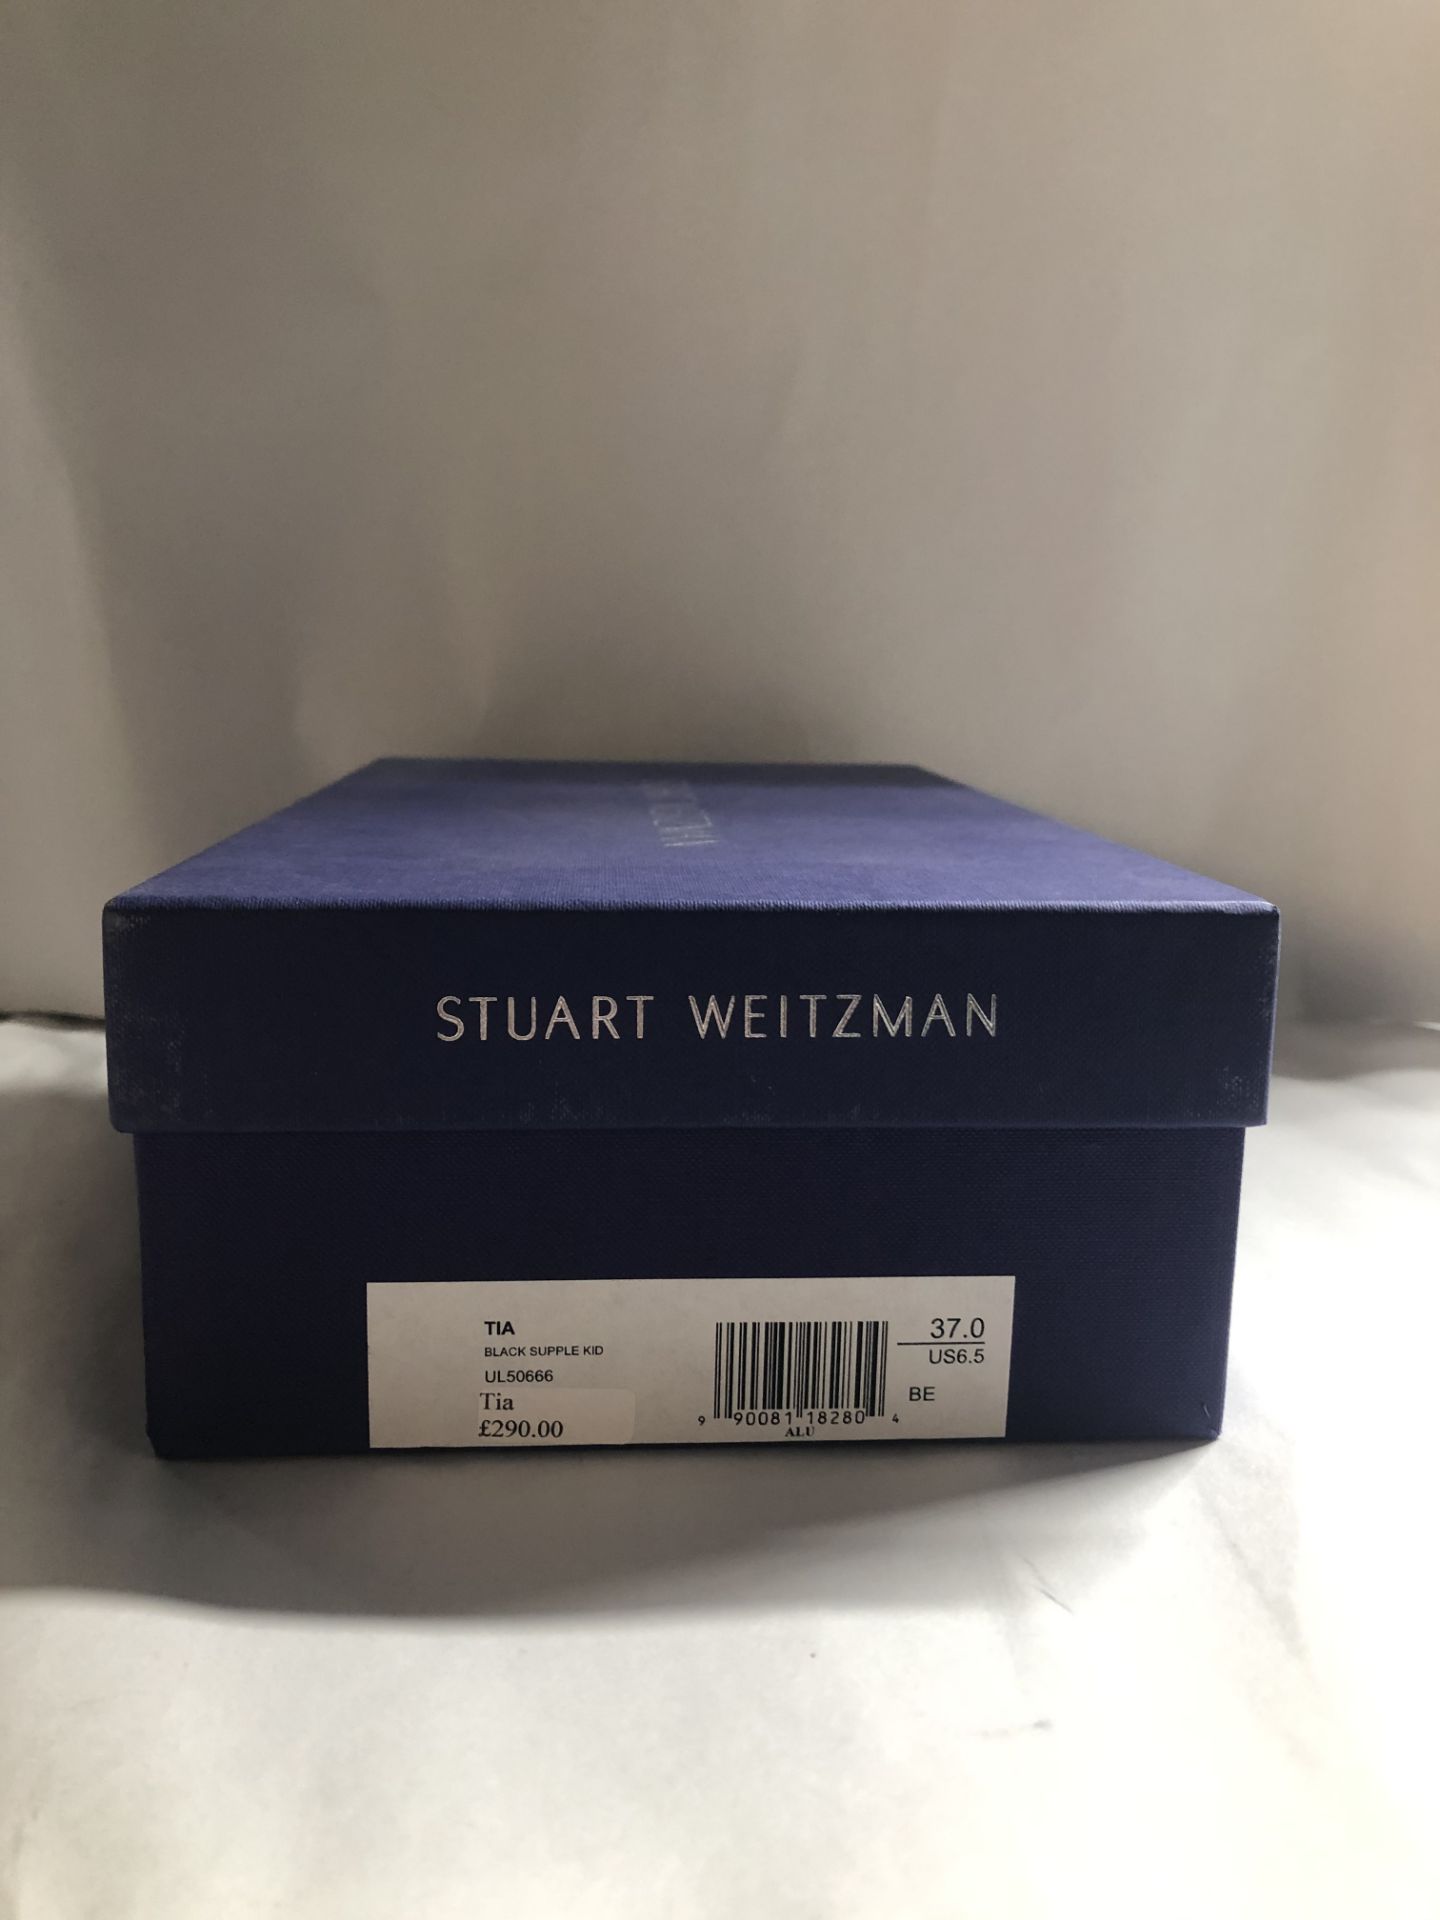 Stuart Weitzman Tia Black Supple Kid Heels. EU 37 RRP £290.00 - Image 2 of 2